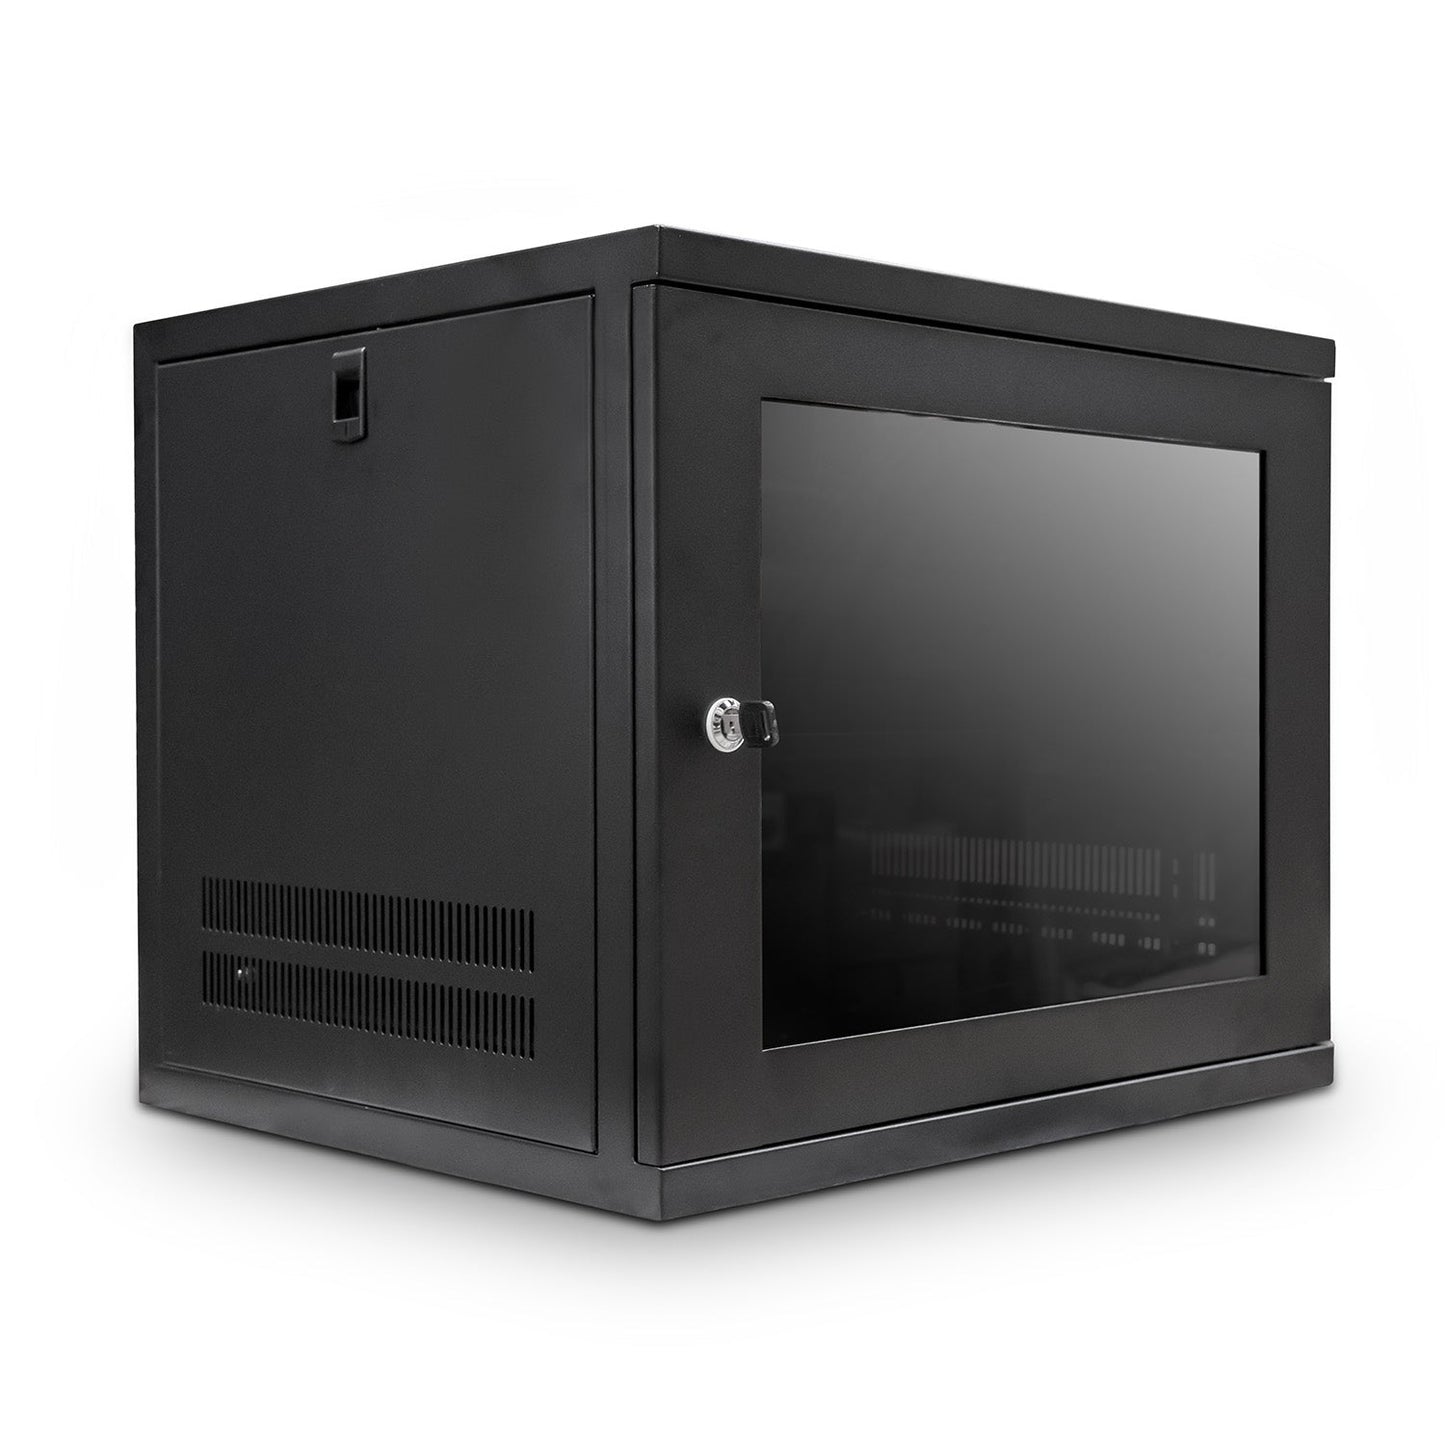 Compact 450mm deep server cabinet